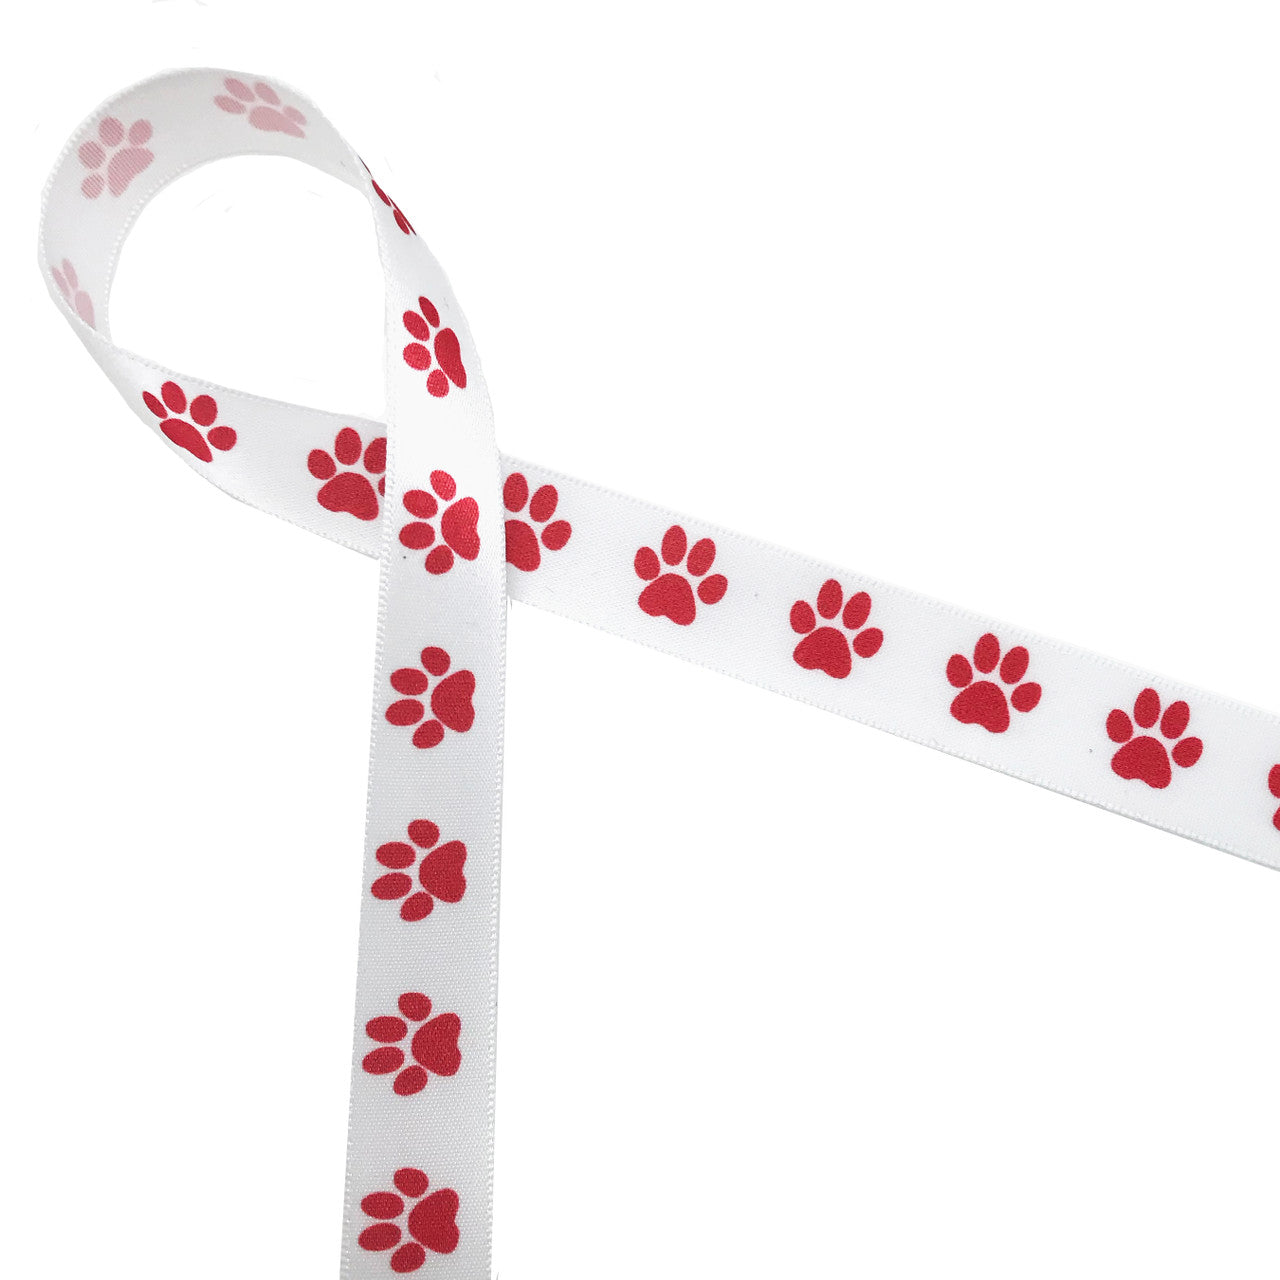 Red Paw Prints ribbon on 5/8" white single face satin